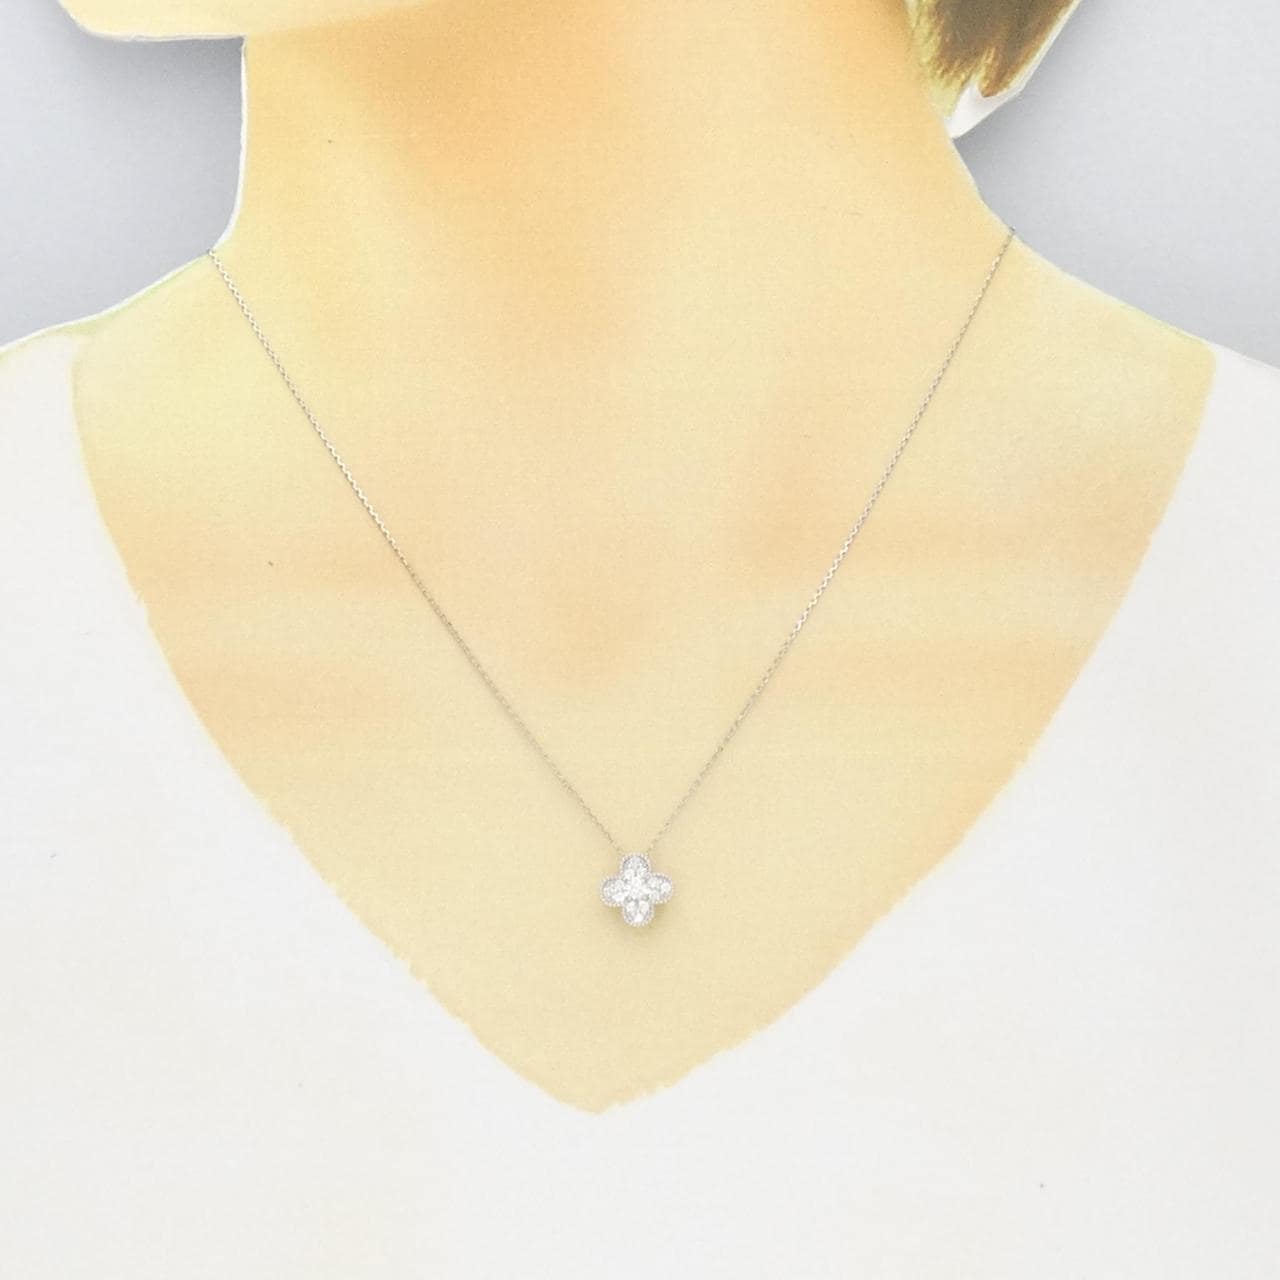 K18WG flower Diamond necklace 0.25CT